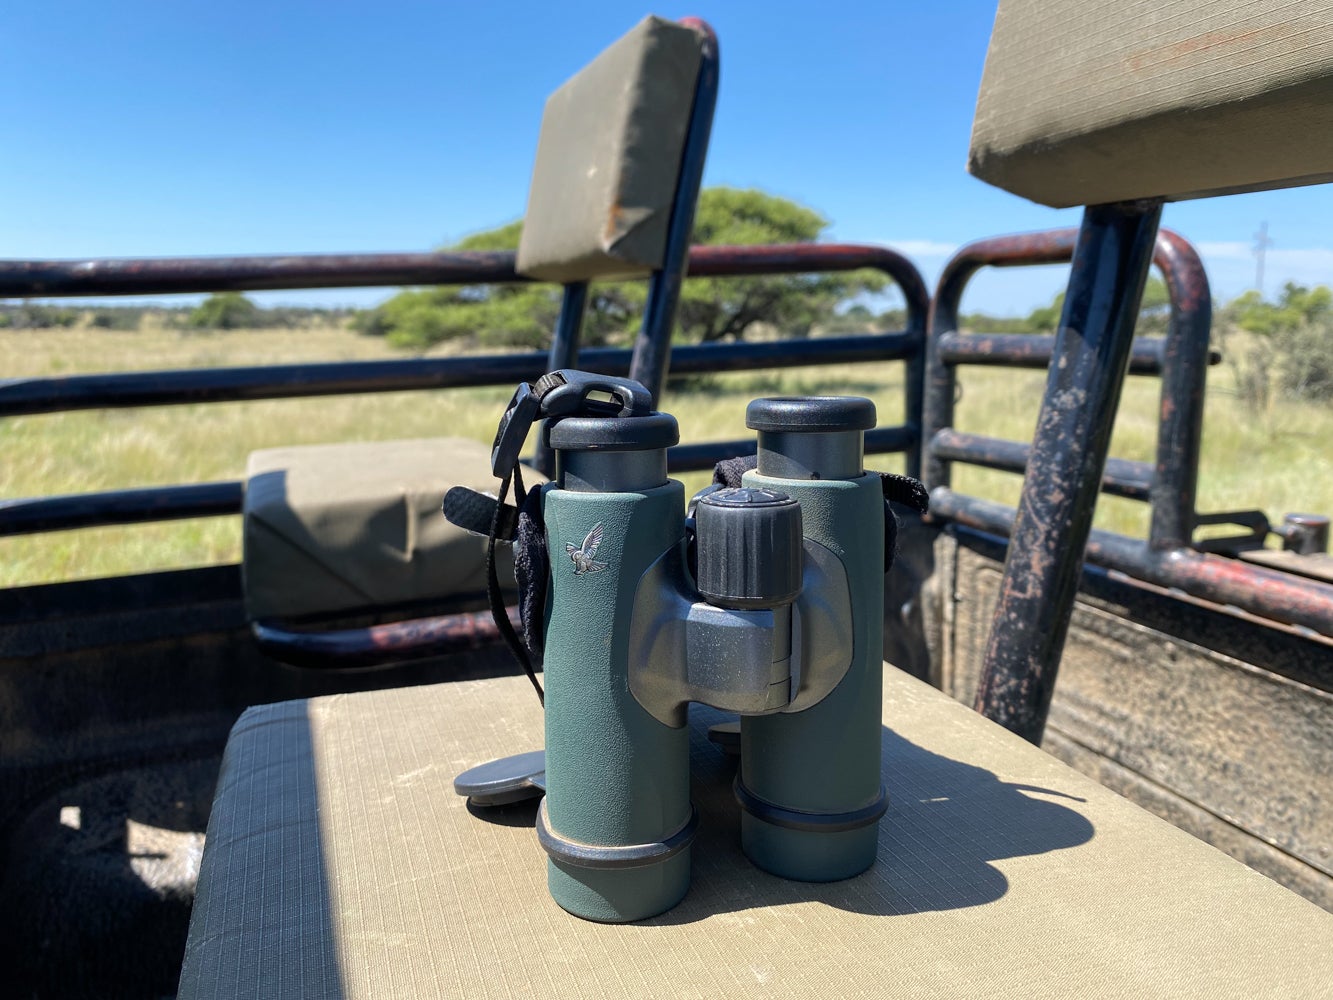 Binoculars on a truck seat.